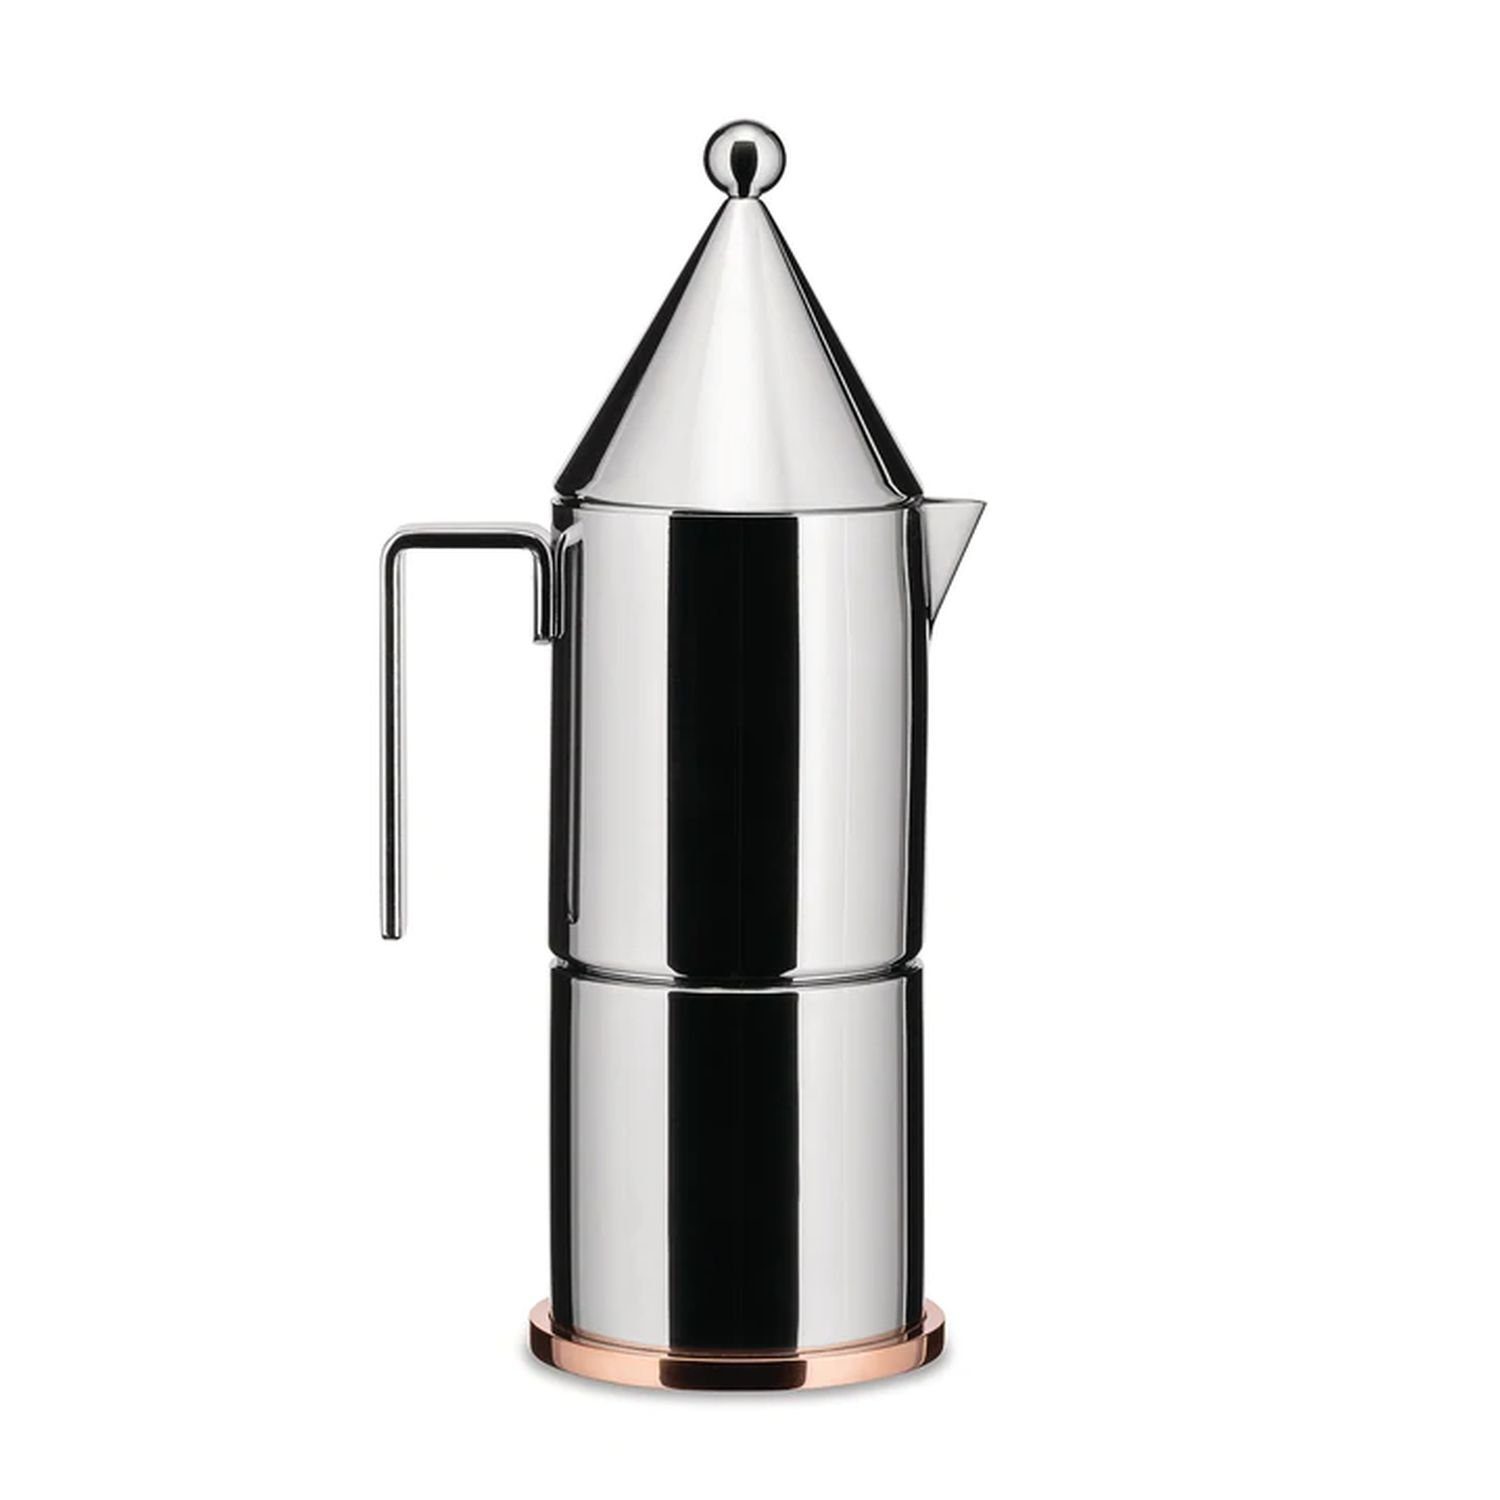 Alessi Espressokocher Tassen, für Kaffeekanne 0,15l Conica La 3